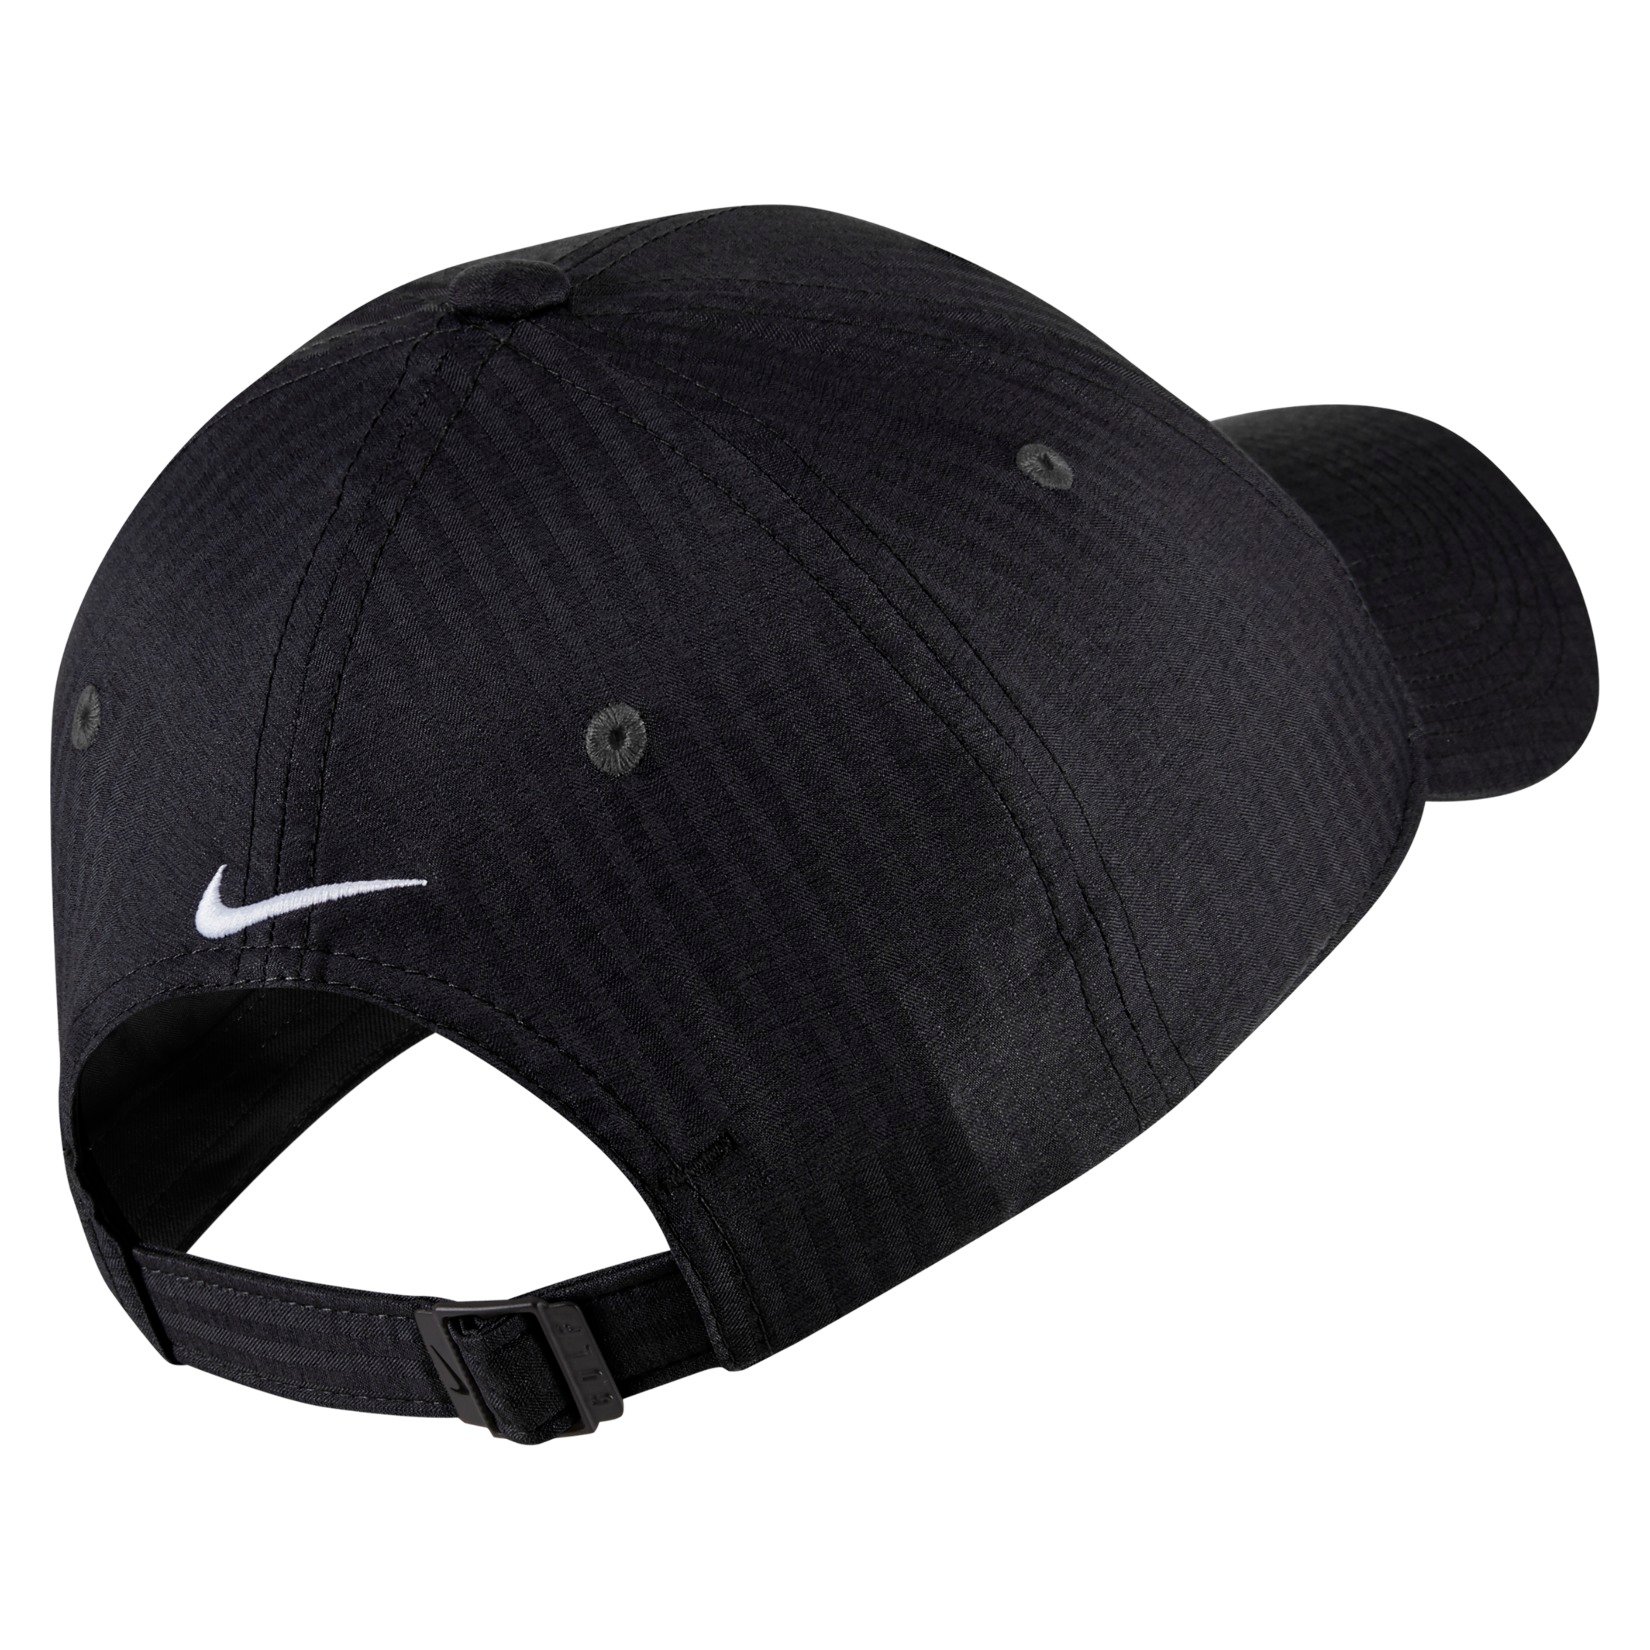 Nike Legacy 91 Cap Black-Anthracite-White